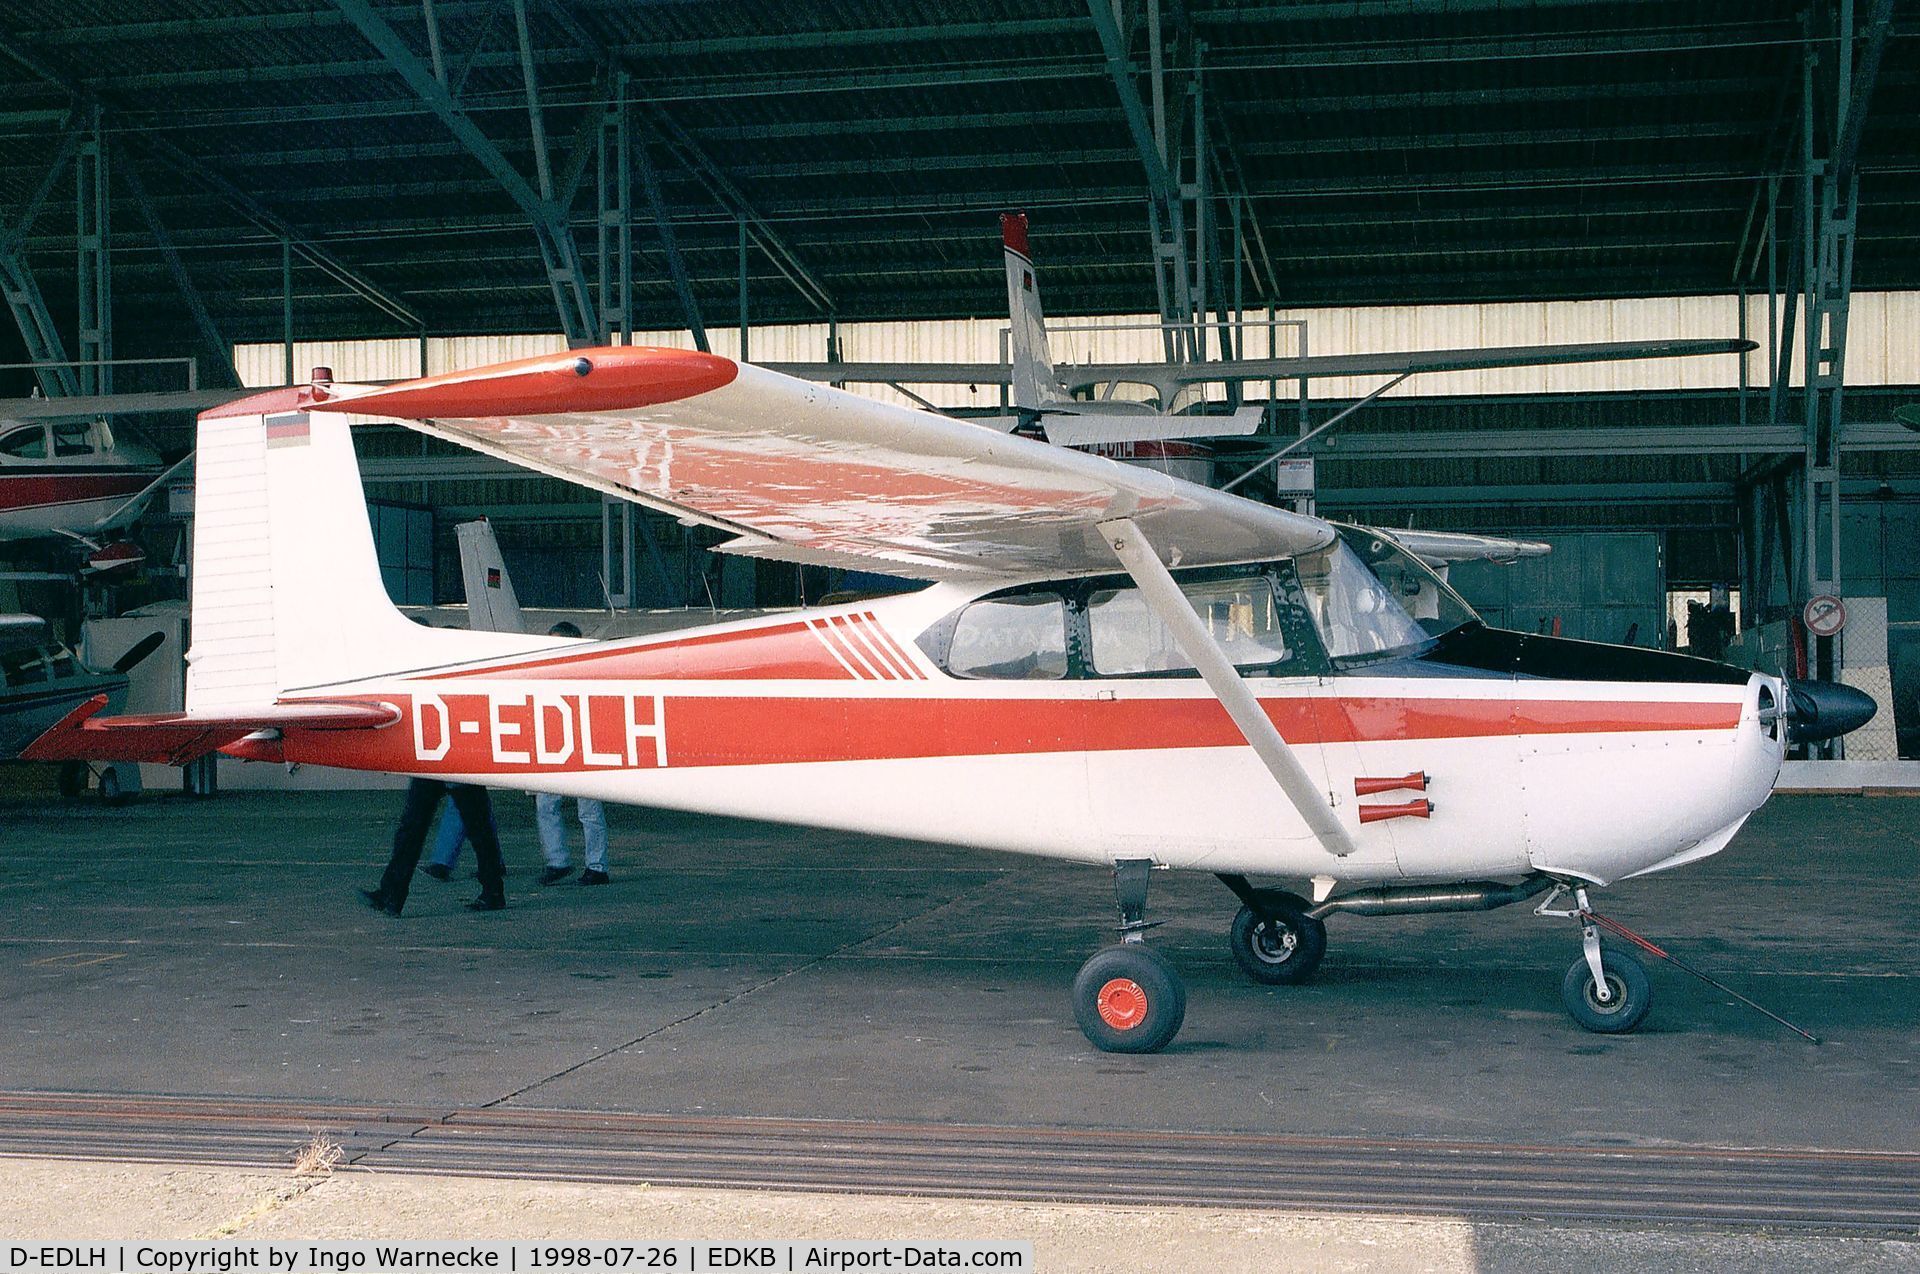 D-EDLH, 1956 Cessna 172 C/N 28871, Cessna 172 (early model) at Bonn-Hangelar airfield